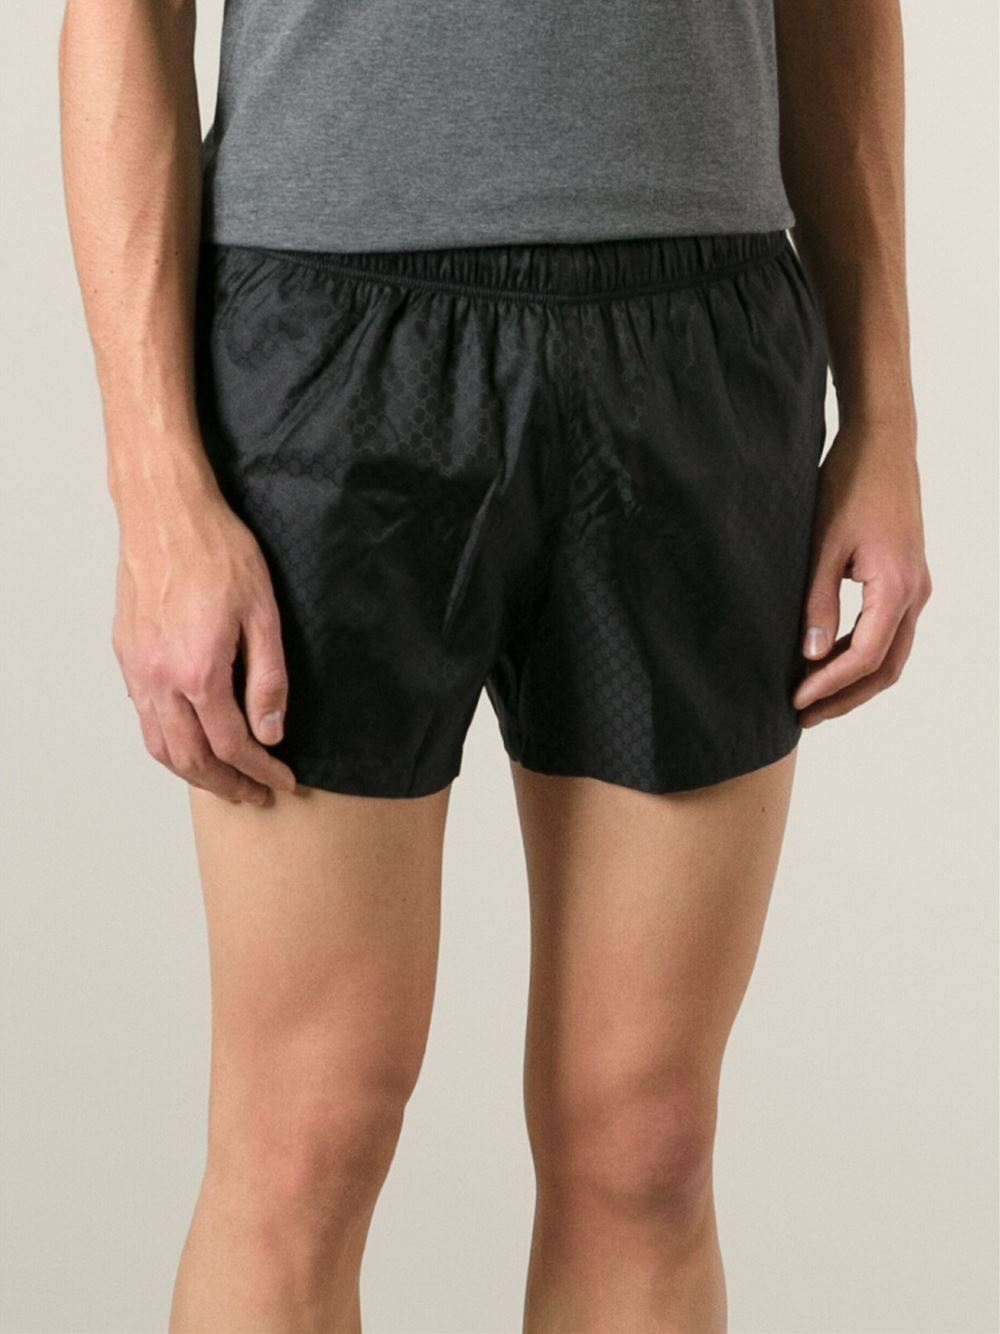 Gucci Swim Shorts in Black for Men - Lyst